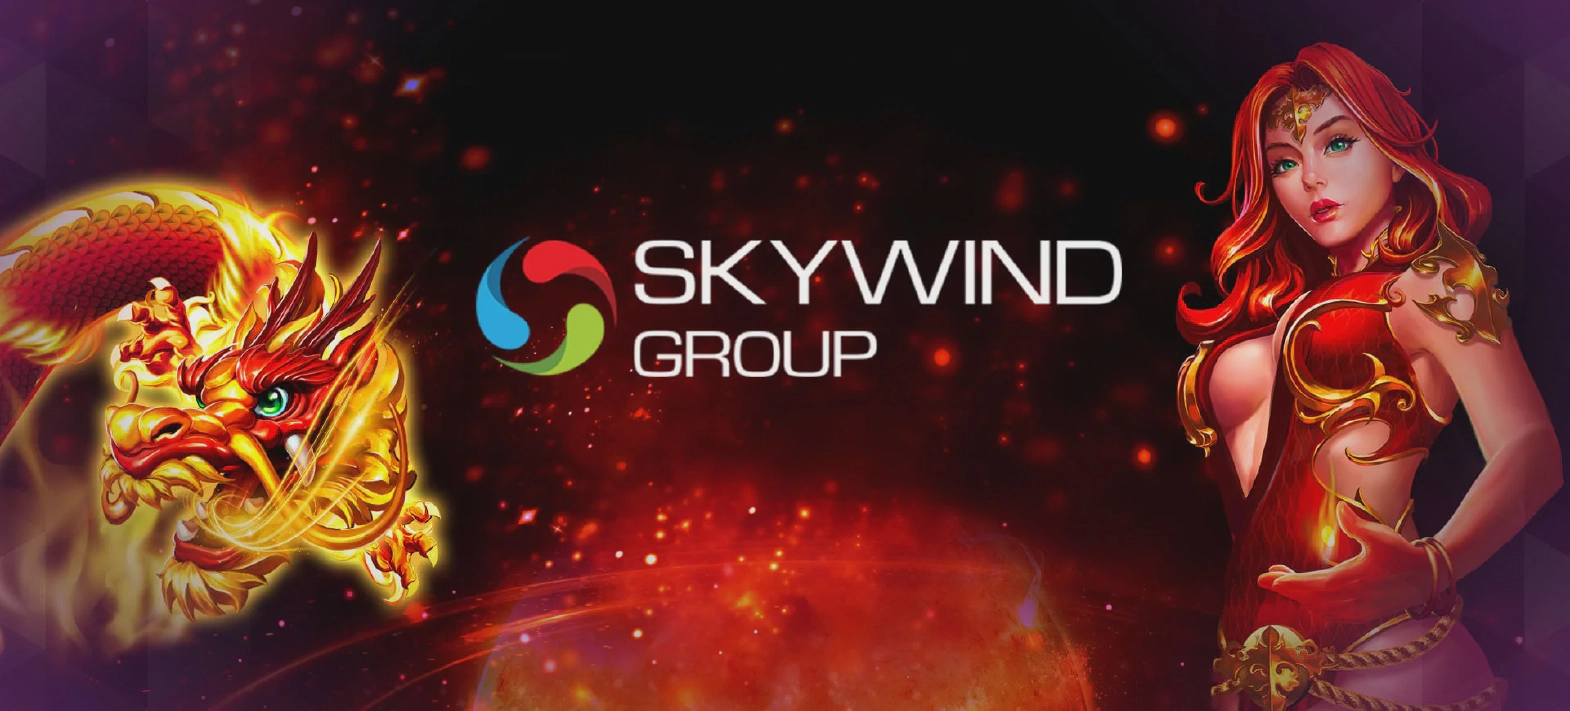 Skywind рд╕реНрд▓реЙрдЯ рдкреНрд░рджрд╛рддрд╛